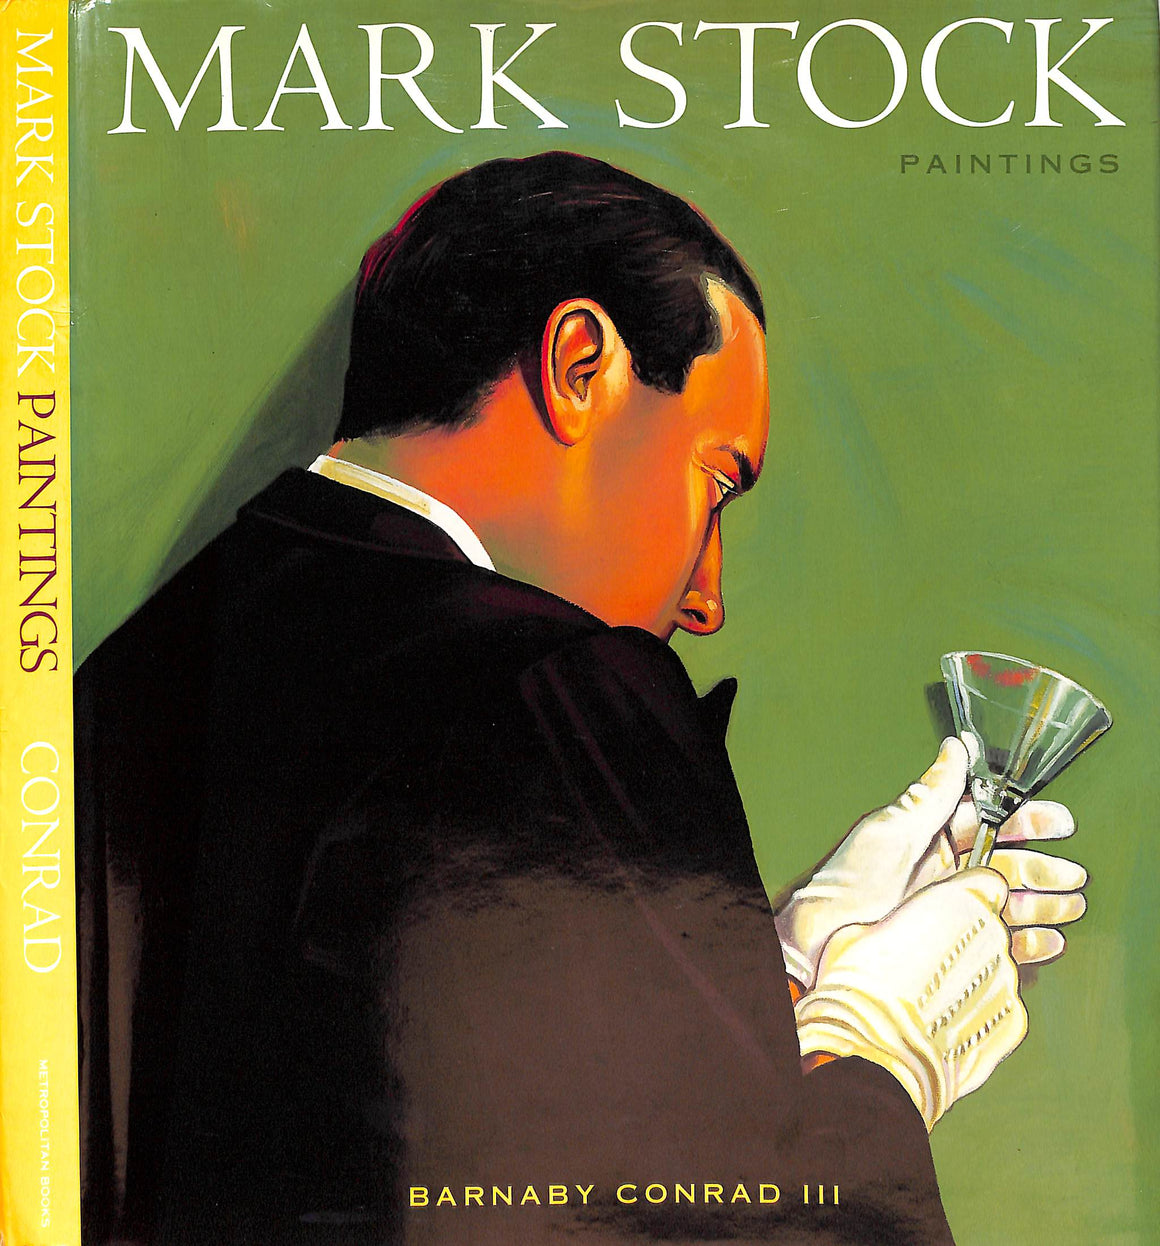 "Mark Stock Paintings" 2000 CONRAD, Barnaby III